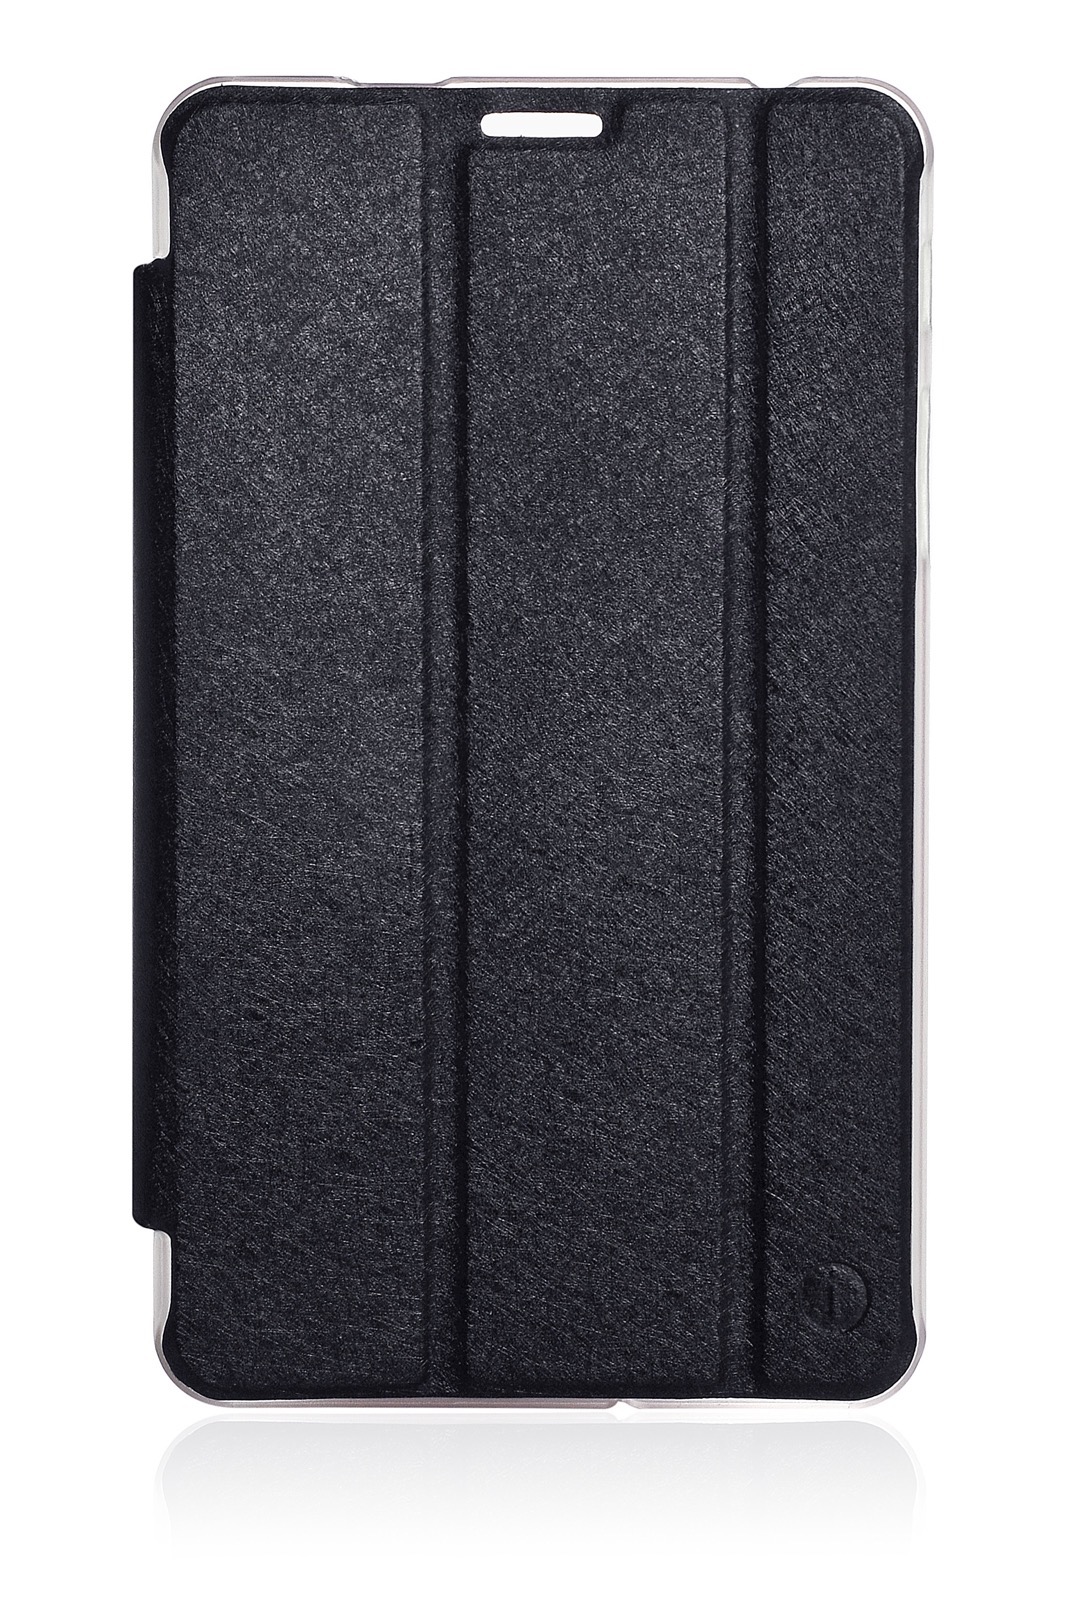 Чехол для планшета iNeez книжка для Samsung Tab A T-280/285 7.0